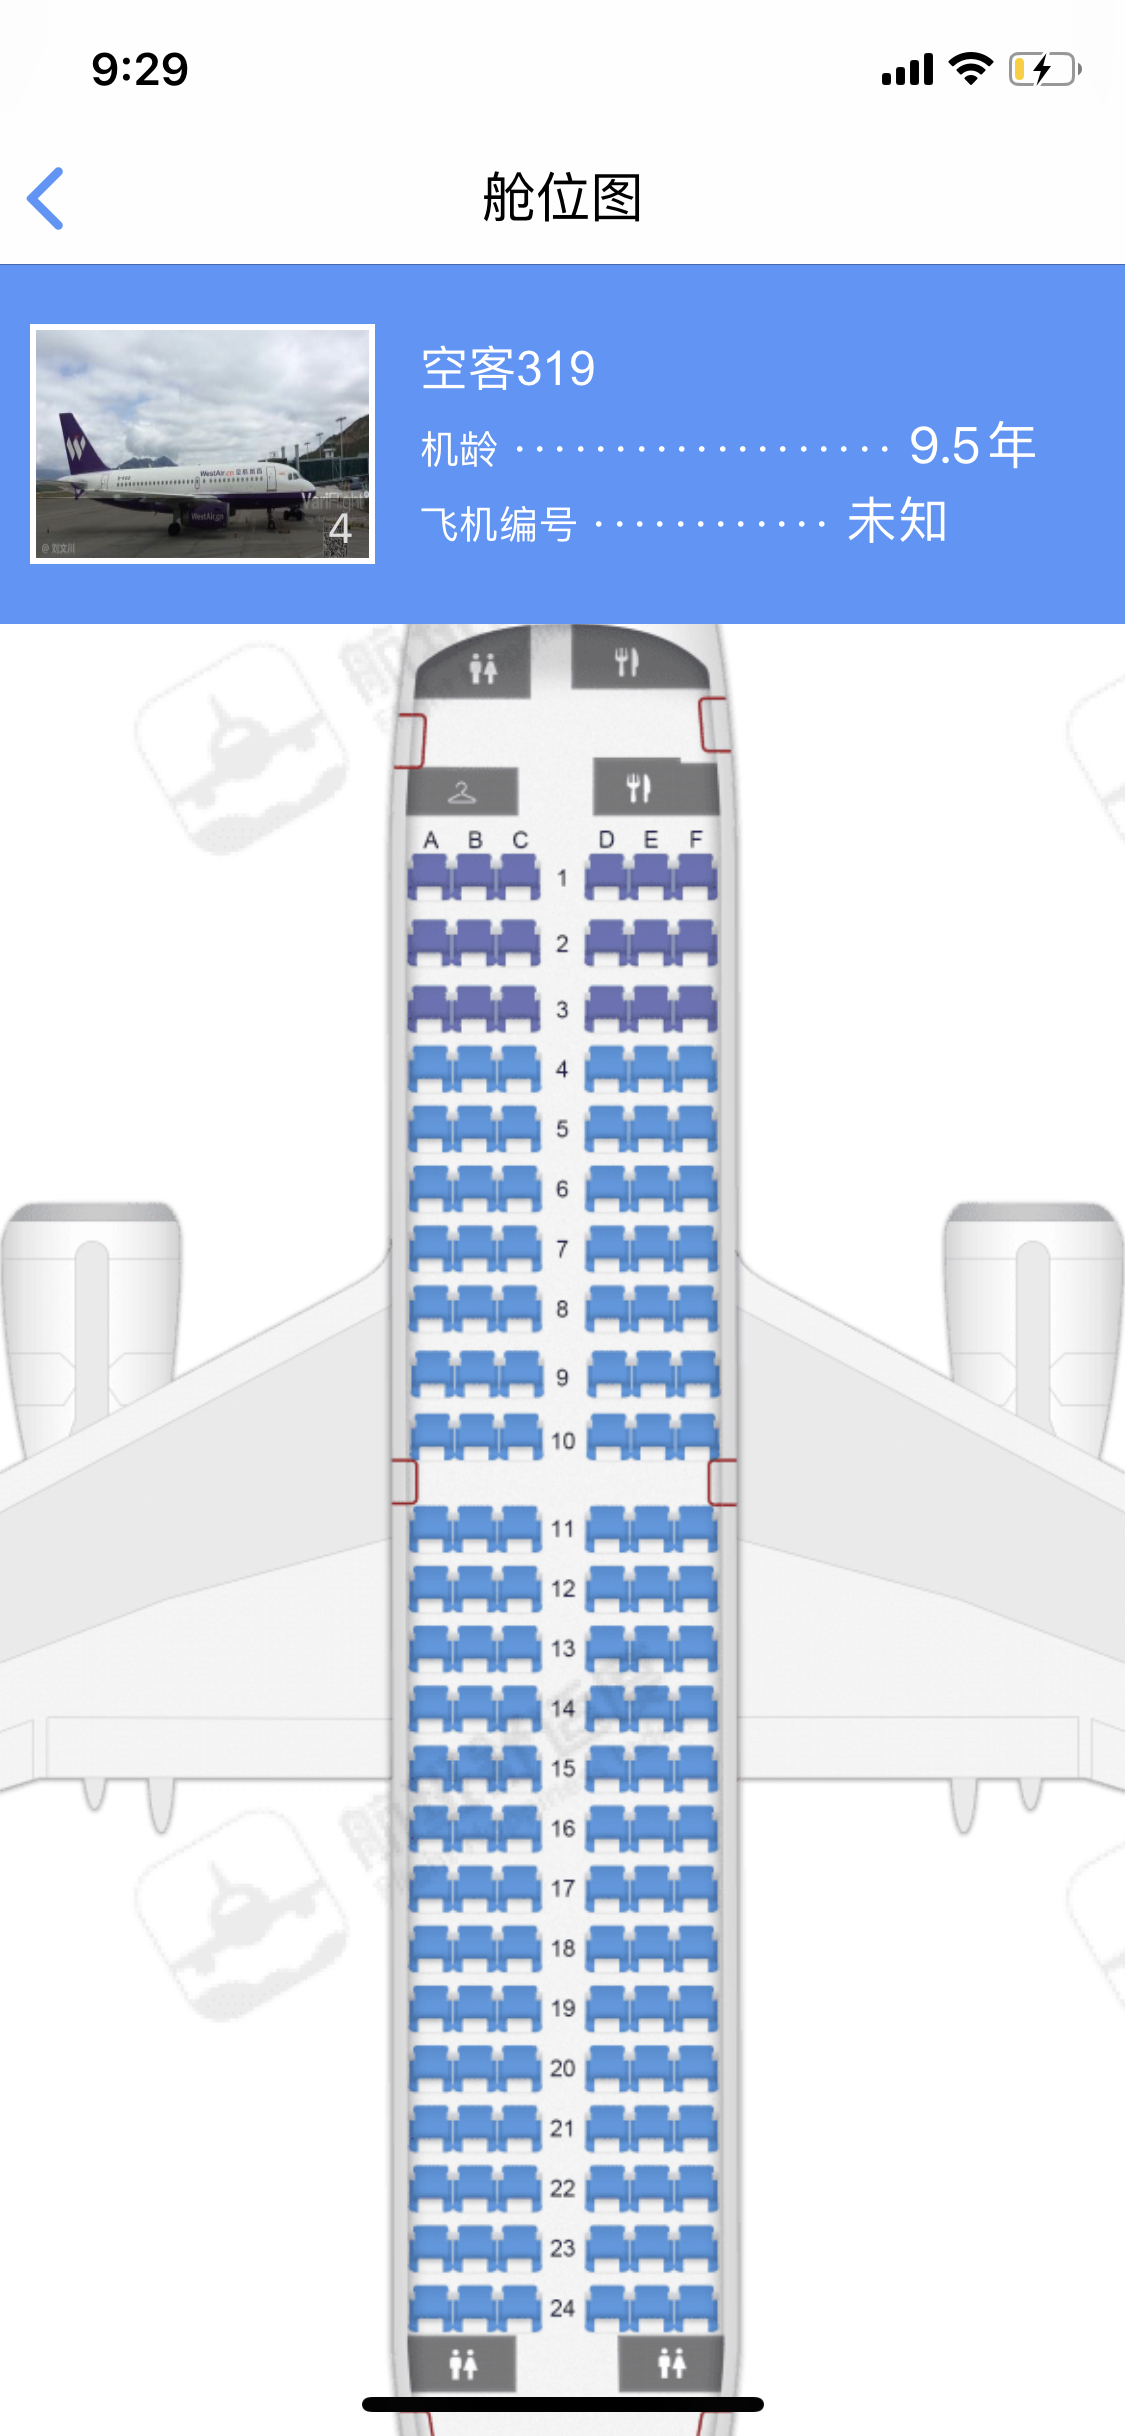 737max座舱图图片